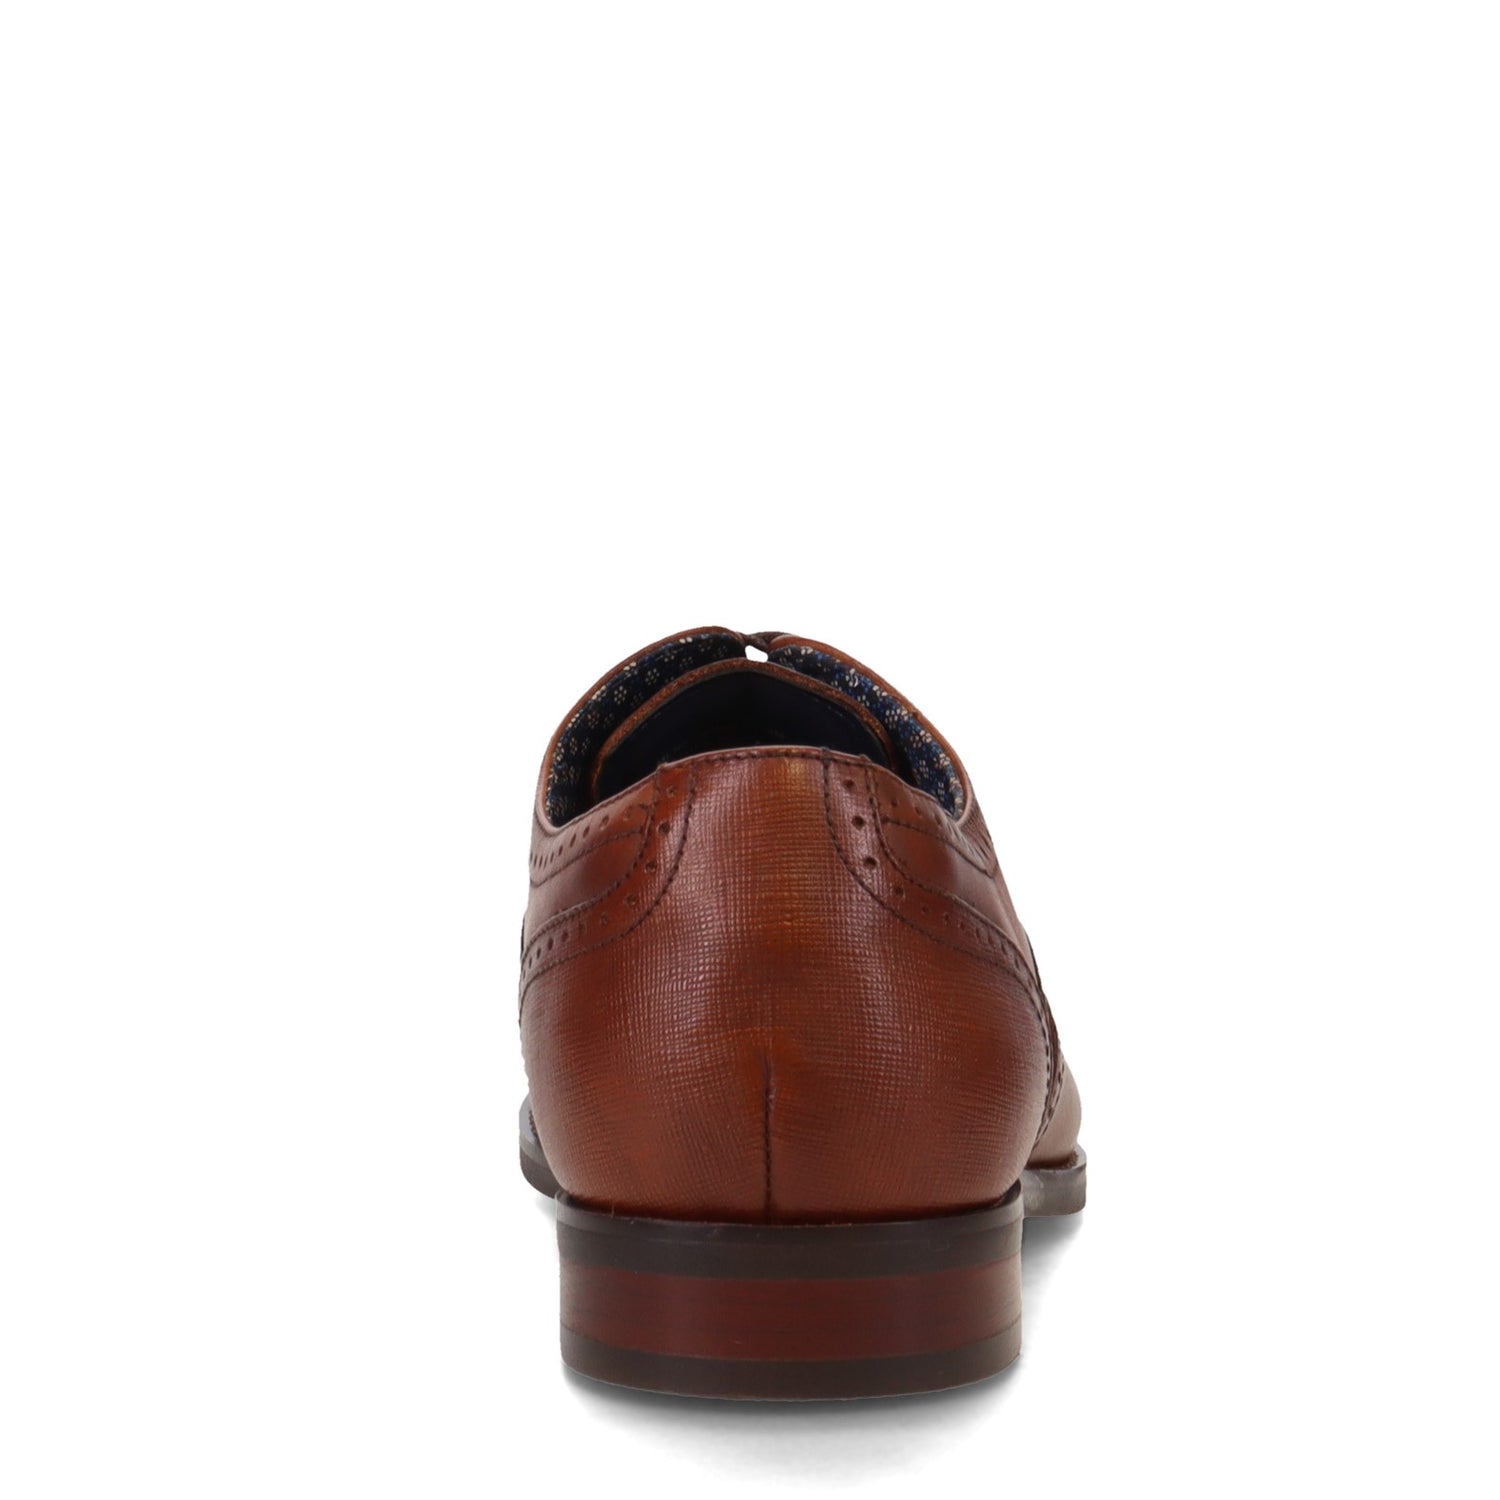 Peltz Shoes  Men's Stacy Adams Kaine Wingtip Oxford COGNAC 25569-221